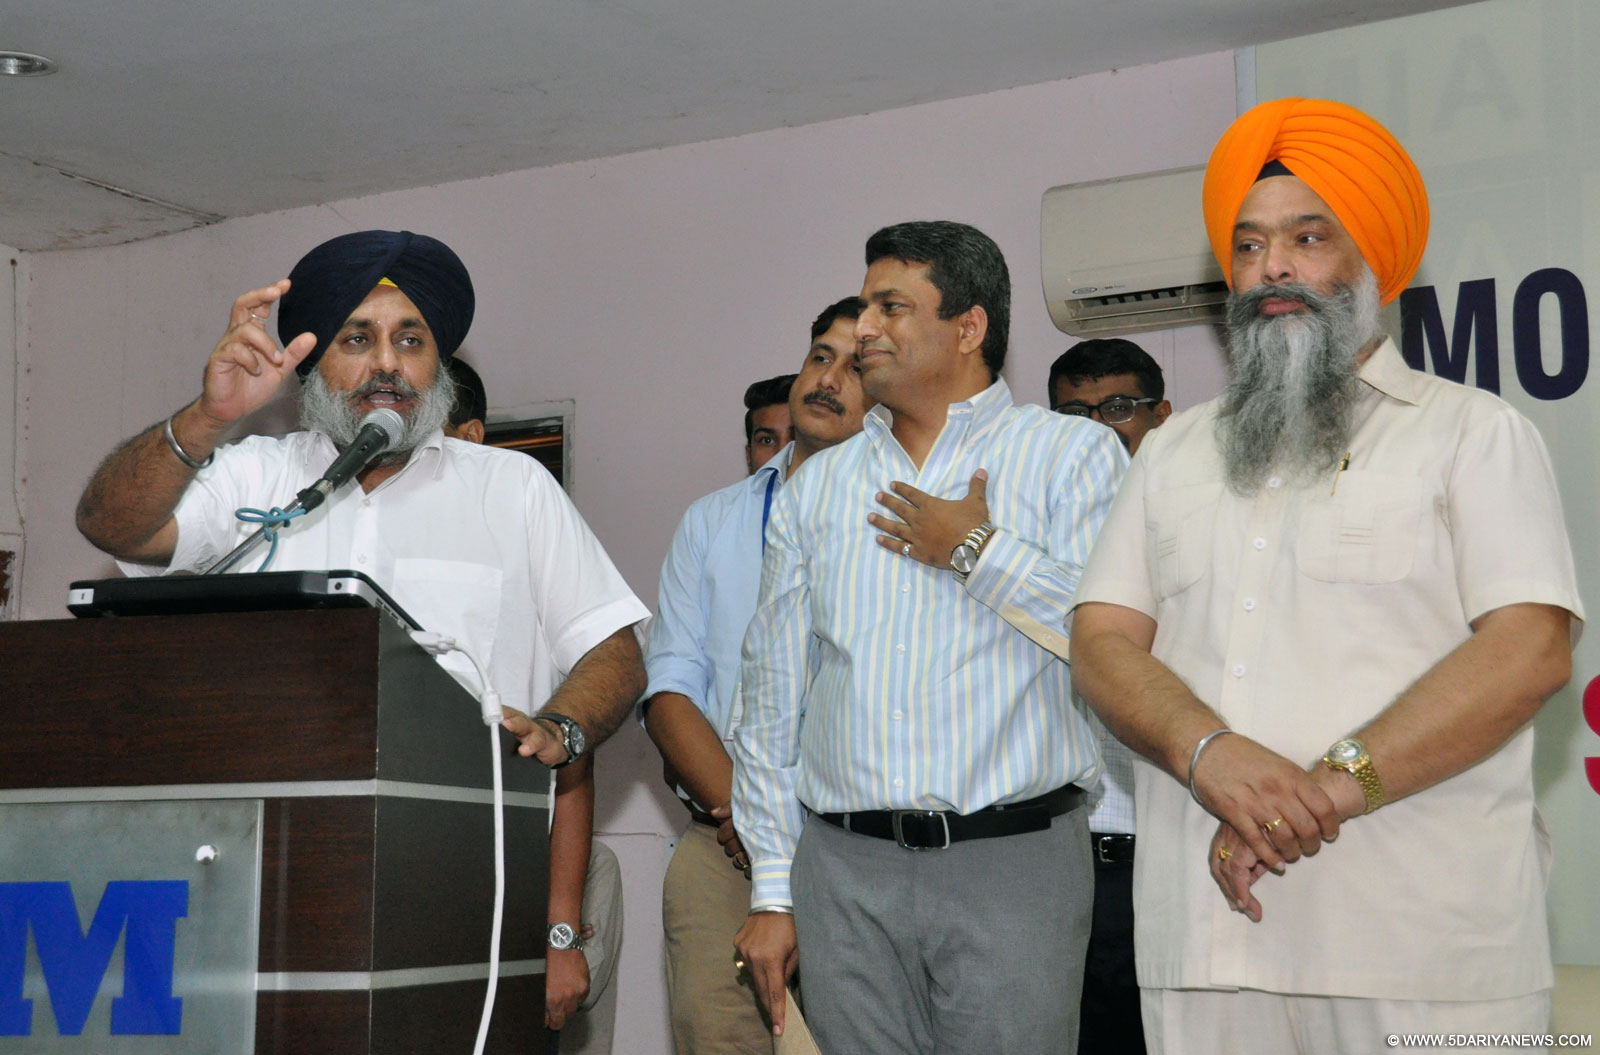 2000 skill development centers to be set up in Punjab : Sukhbir Singh Badal